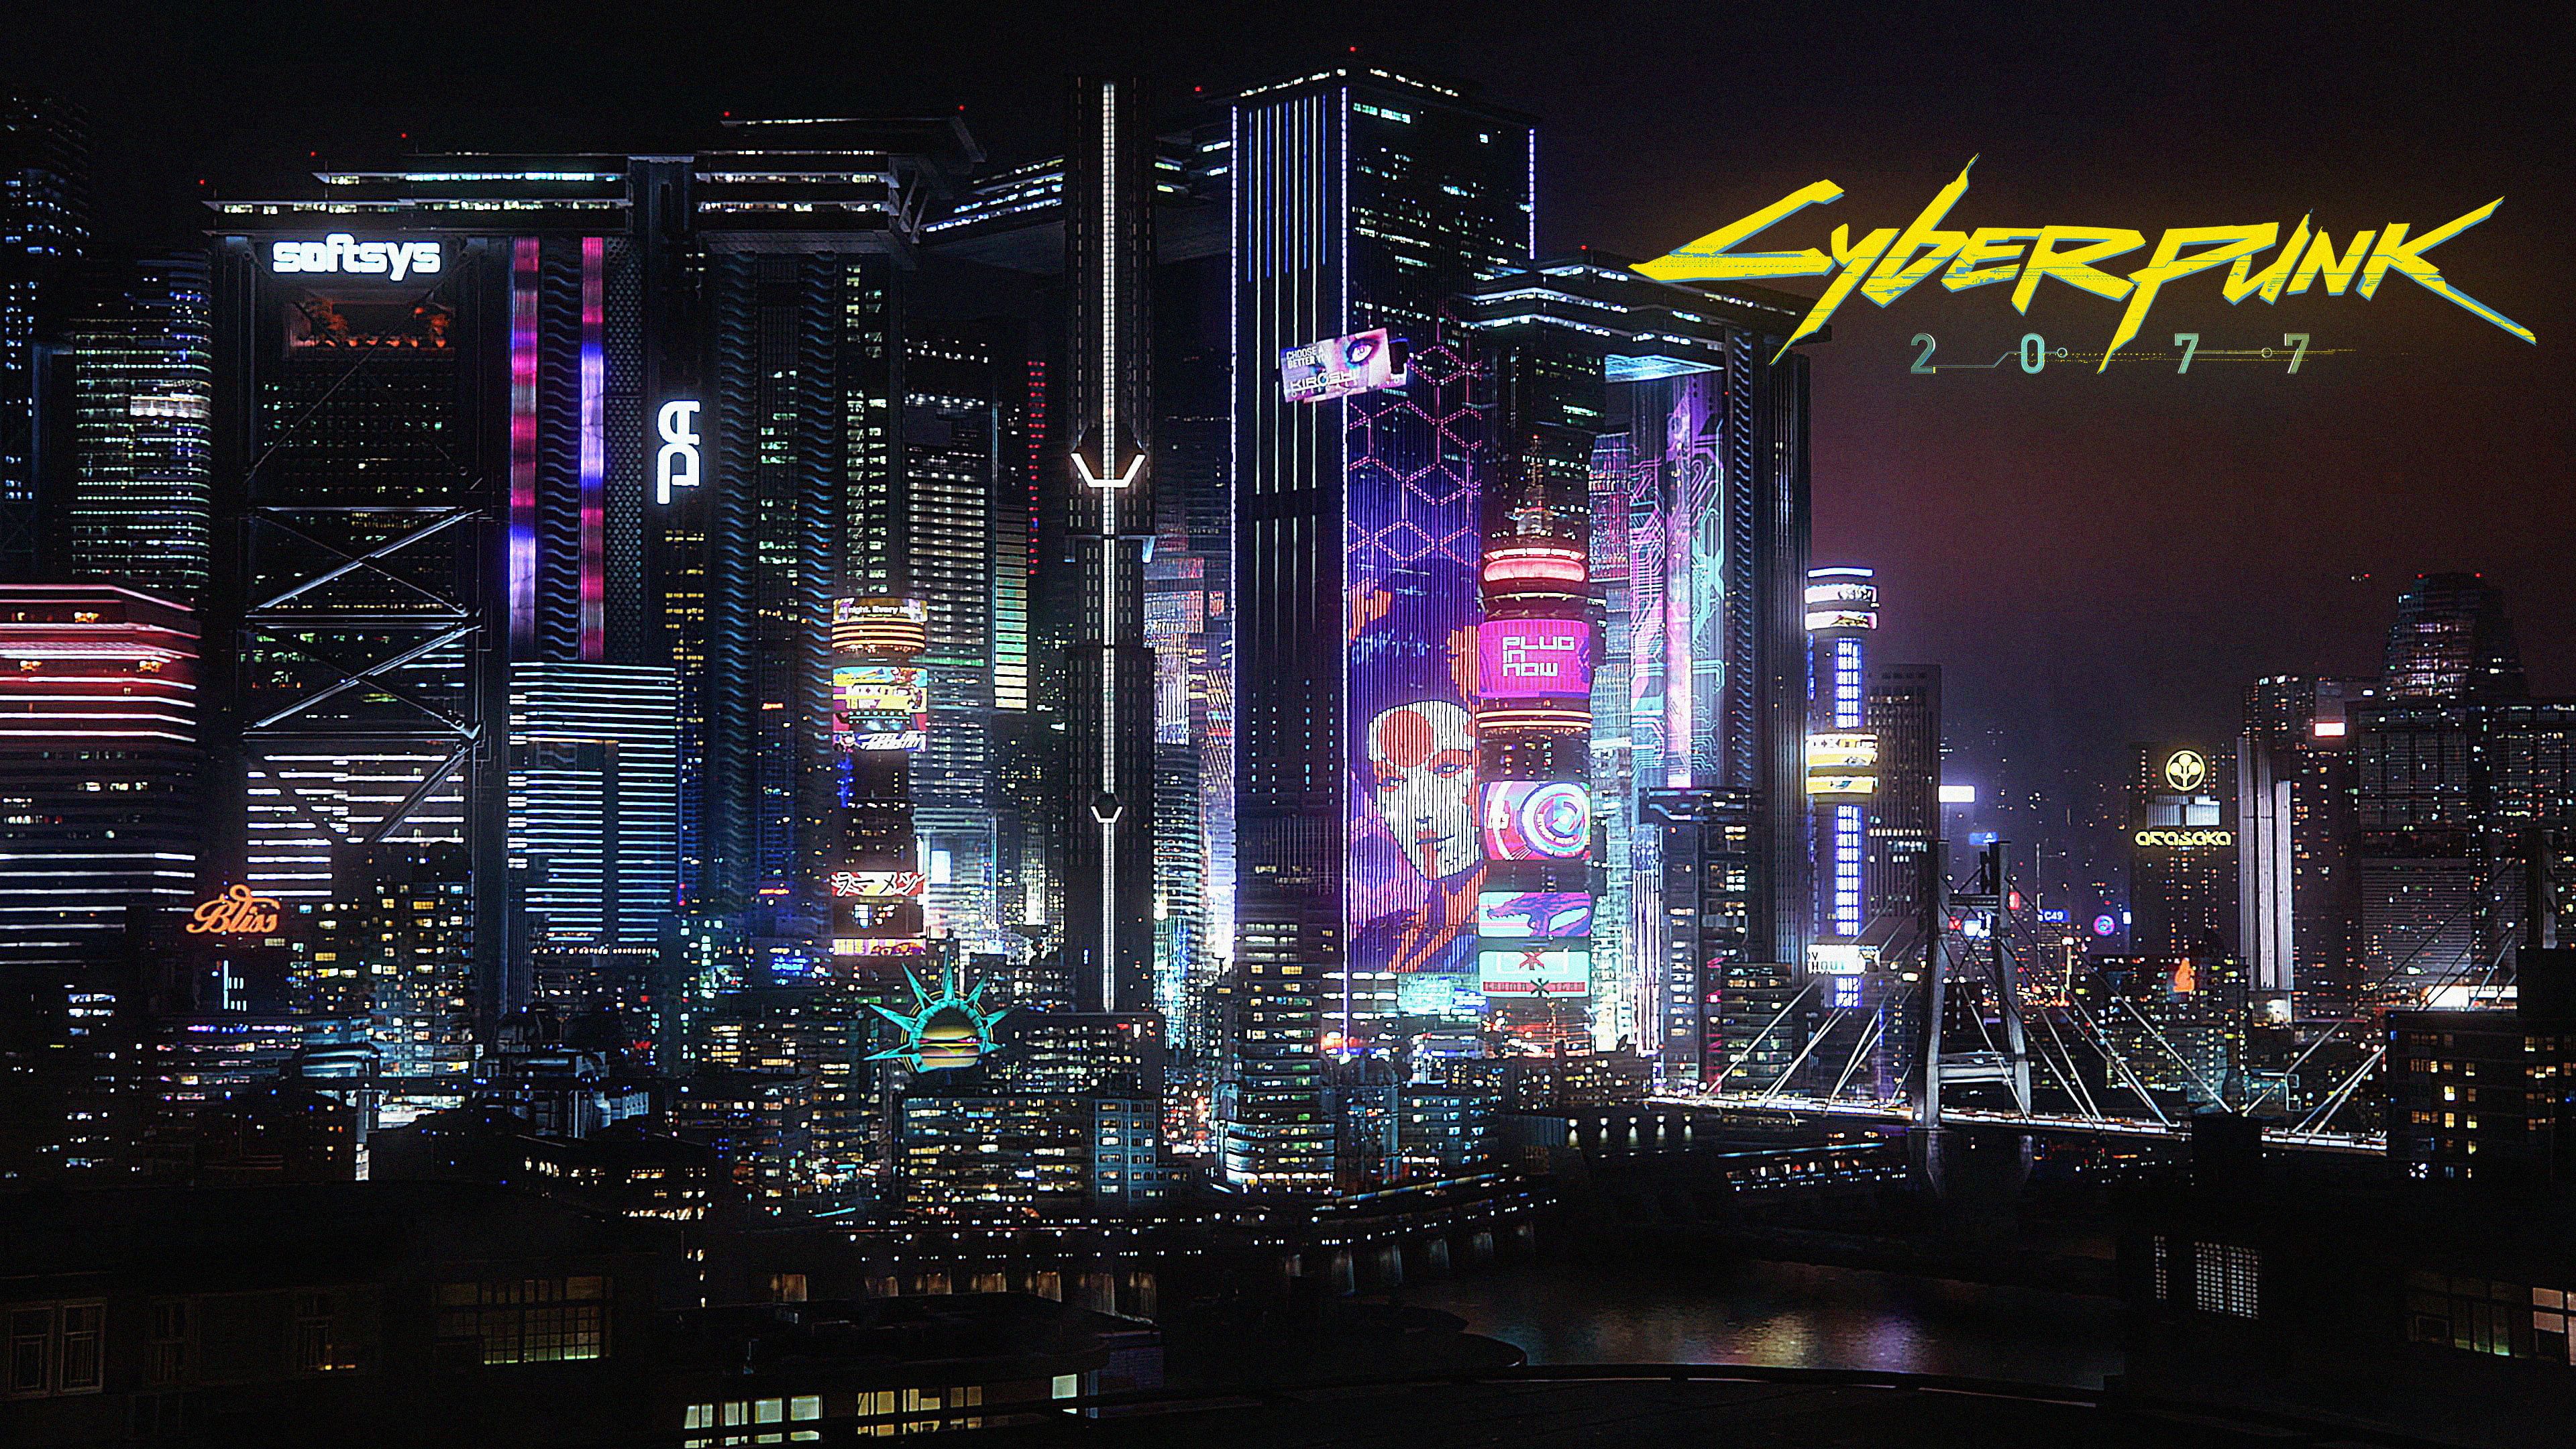 Cyberpunk 2077 #cyberpunk video game art #city #night city lights neon glow #bridge K #wallpaper #hdwallpaper #desktop. Pixel art, Cyberpunk, Cyberpunk 2077